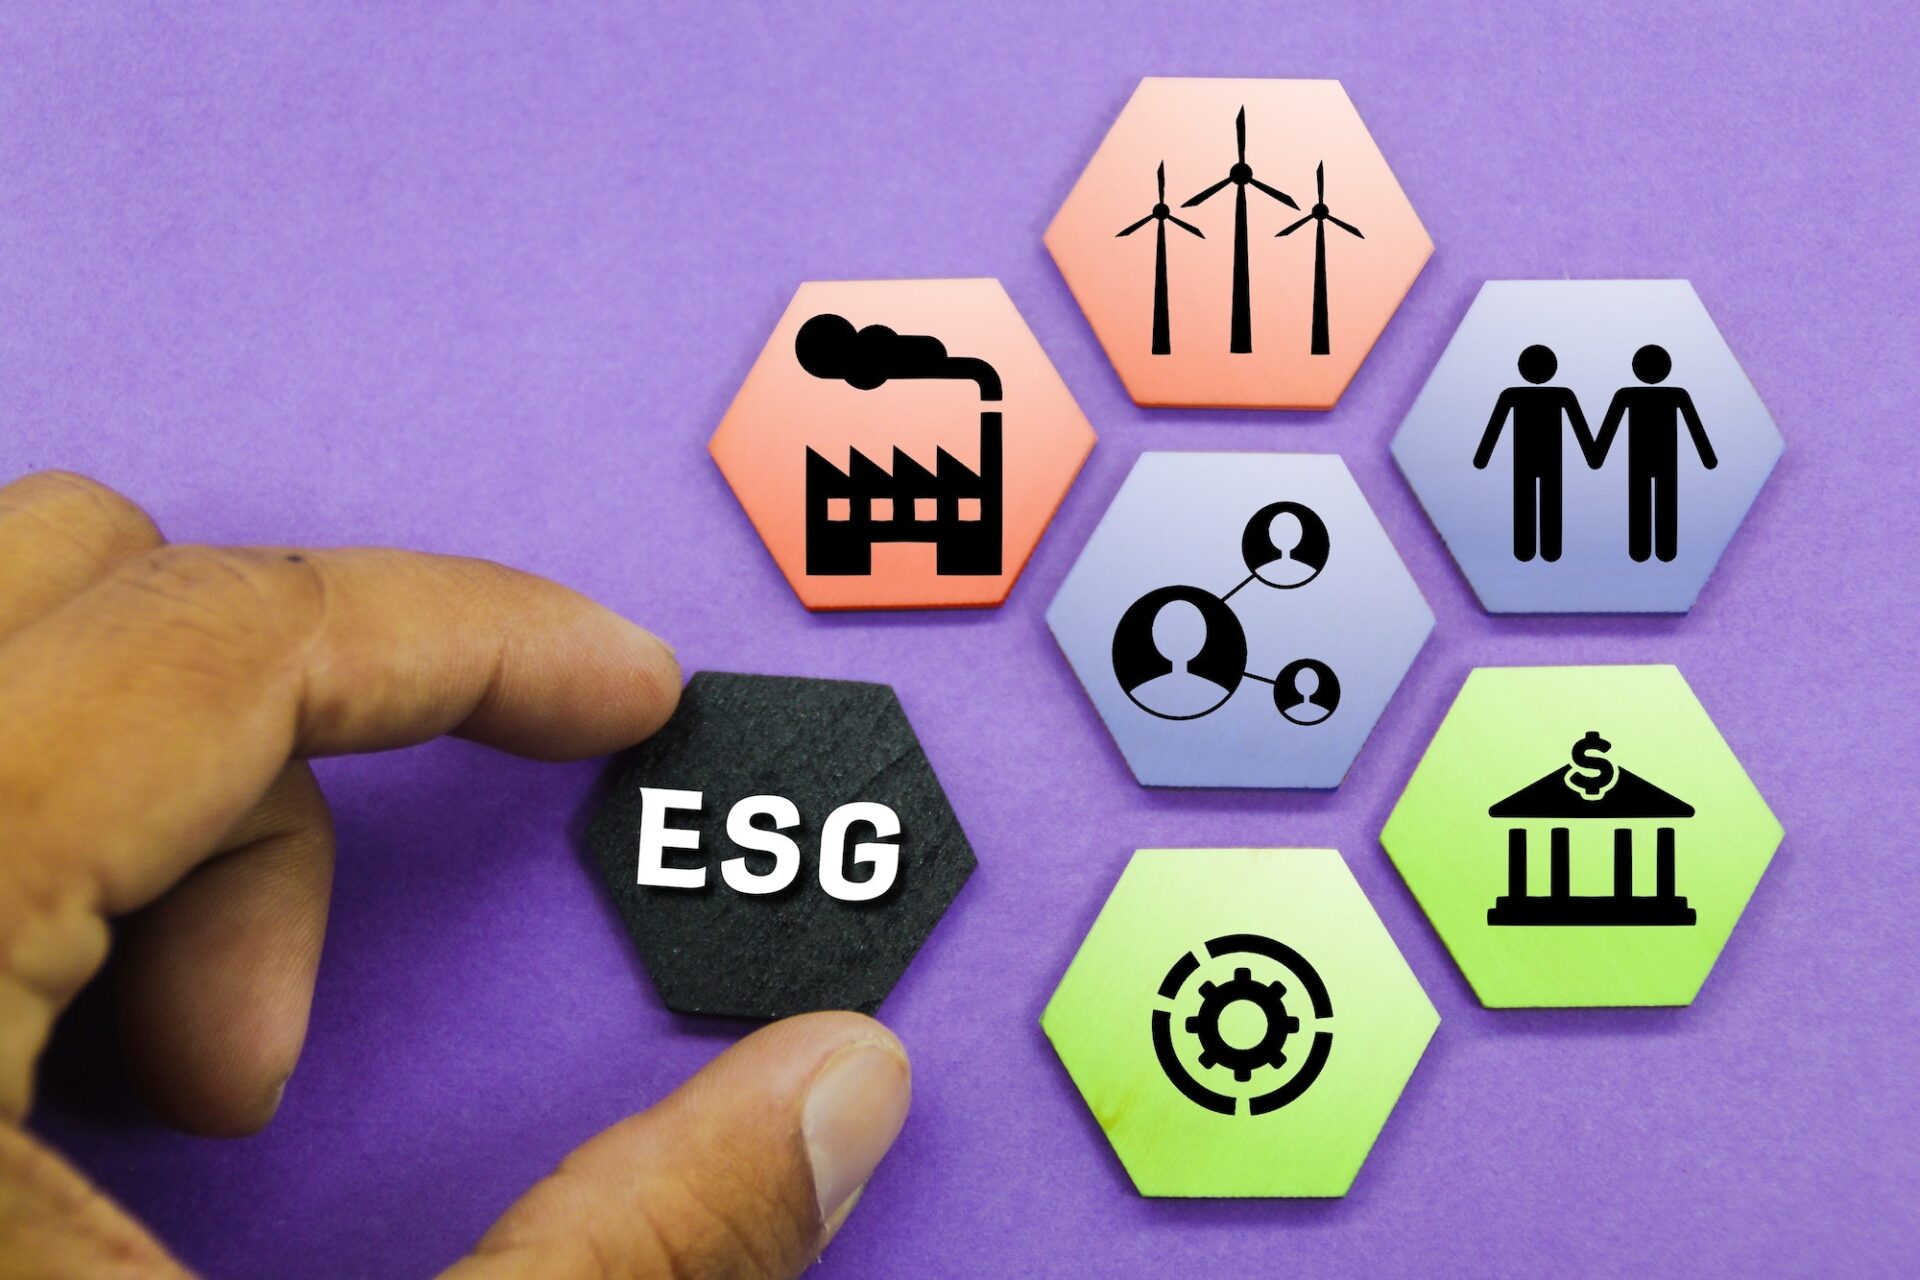 hexagon with the Concept of ESG or Environmental, Social and Governance